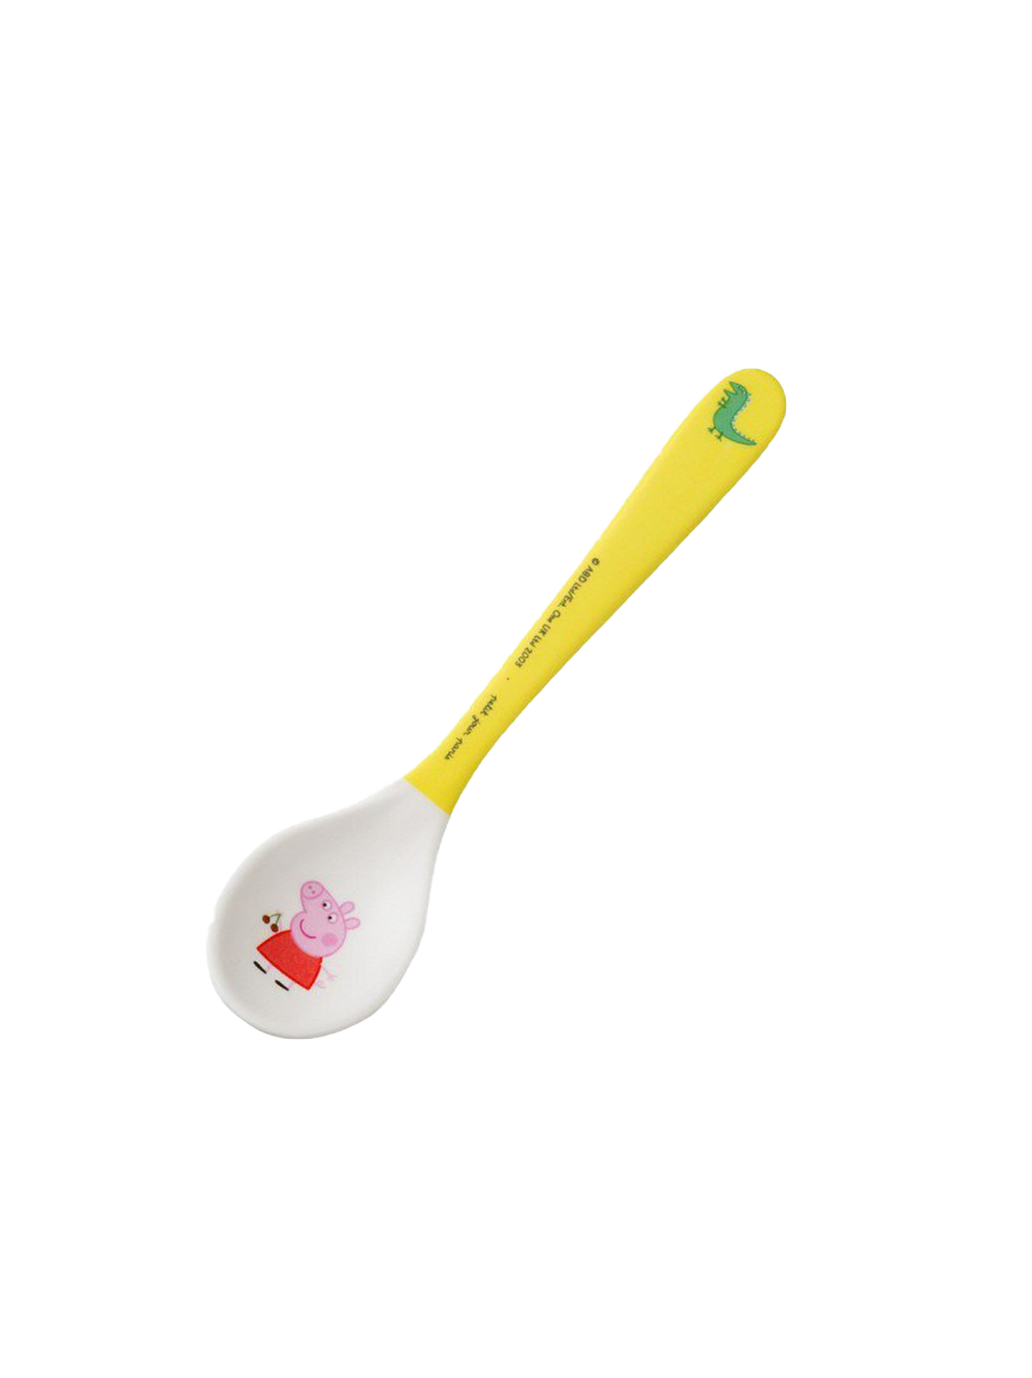 Melamine spoon